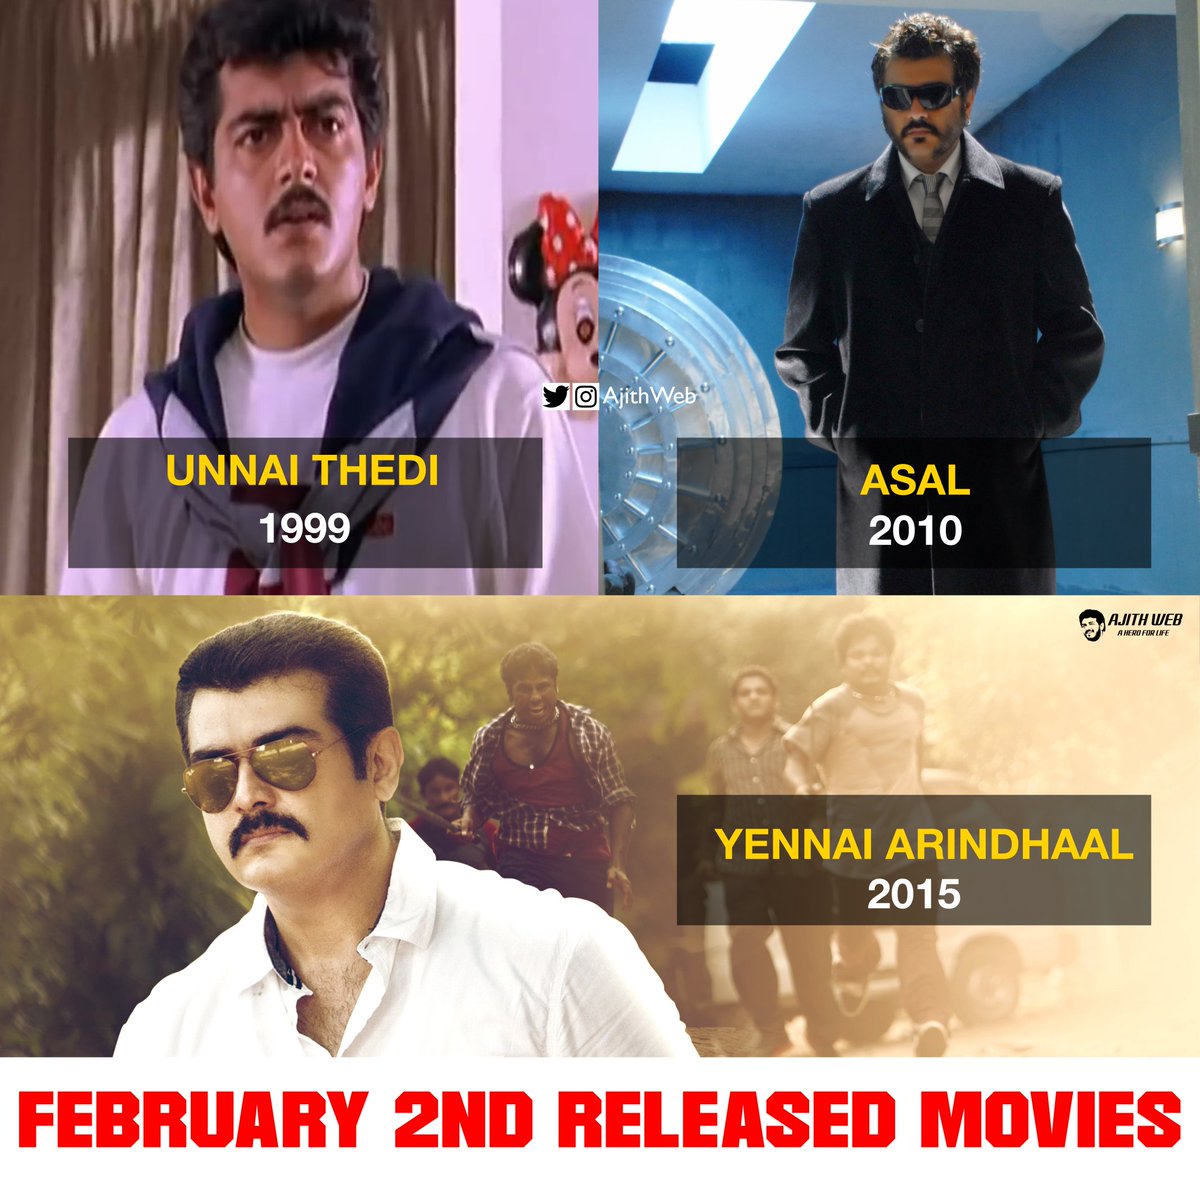 Thala #Ajith's February 2 Released Movies 😎

• Unnai Thedi - #21YrsOfUnnaiThedi 
• Asal              - #10YrsOfAsal
• Yennai Arindhaal - #5YrsOfClassyYennaiArindhaal 

#ThalaAjith | #UnnaiThedi | #Asal | #YennaiArindhaal | #Valimai